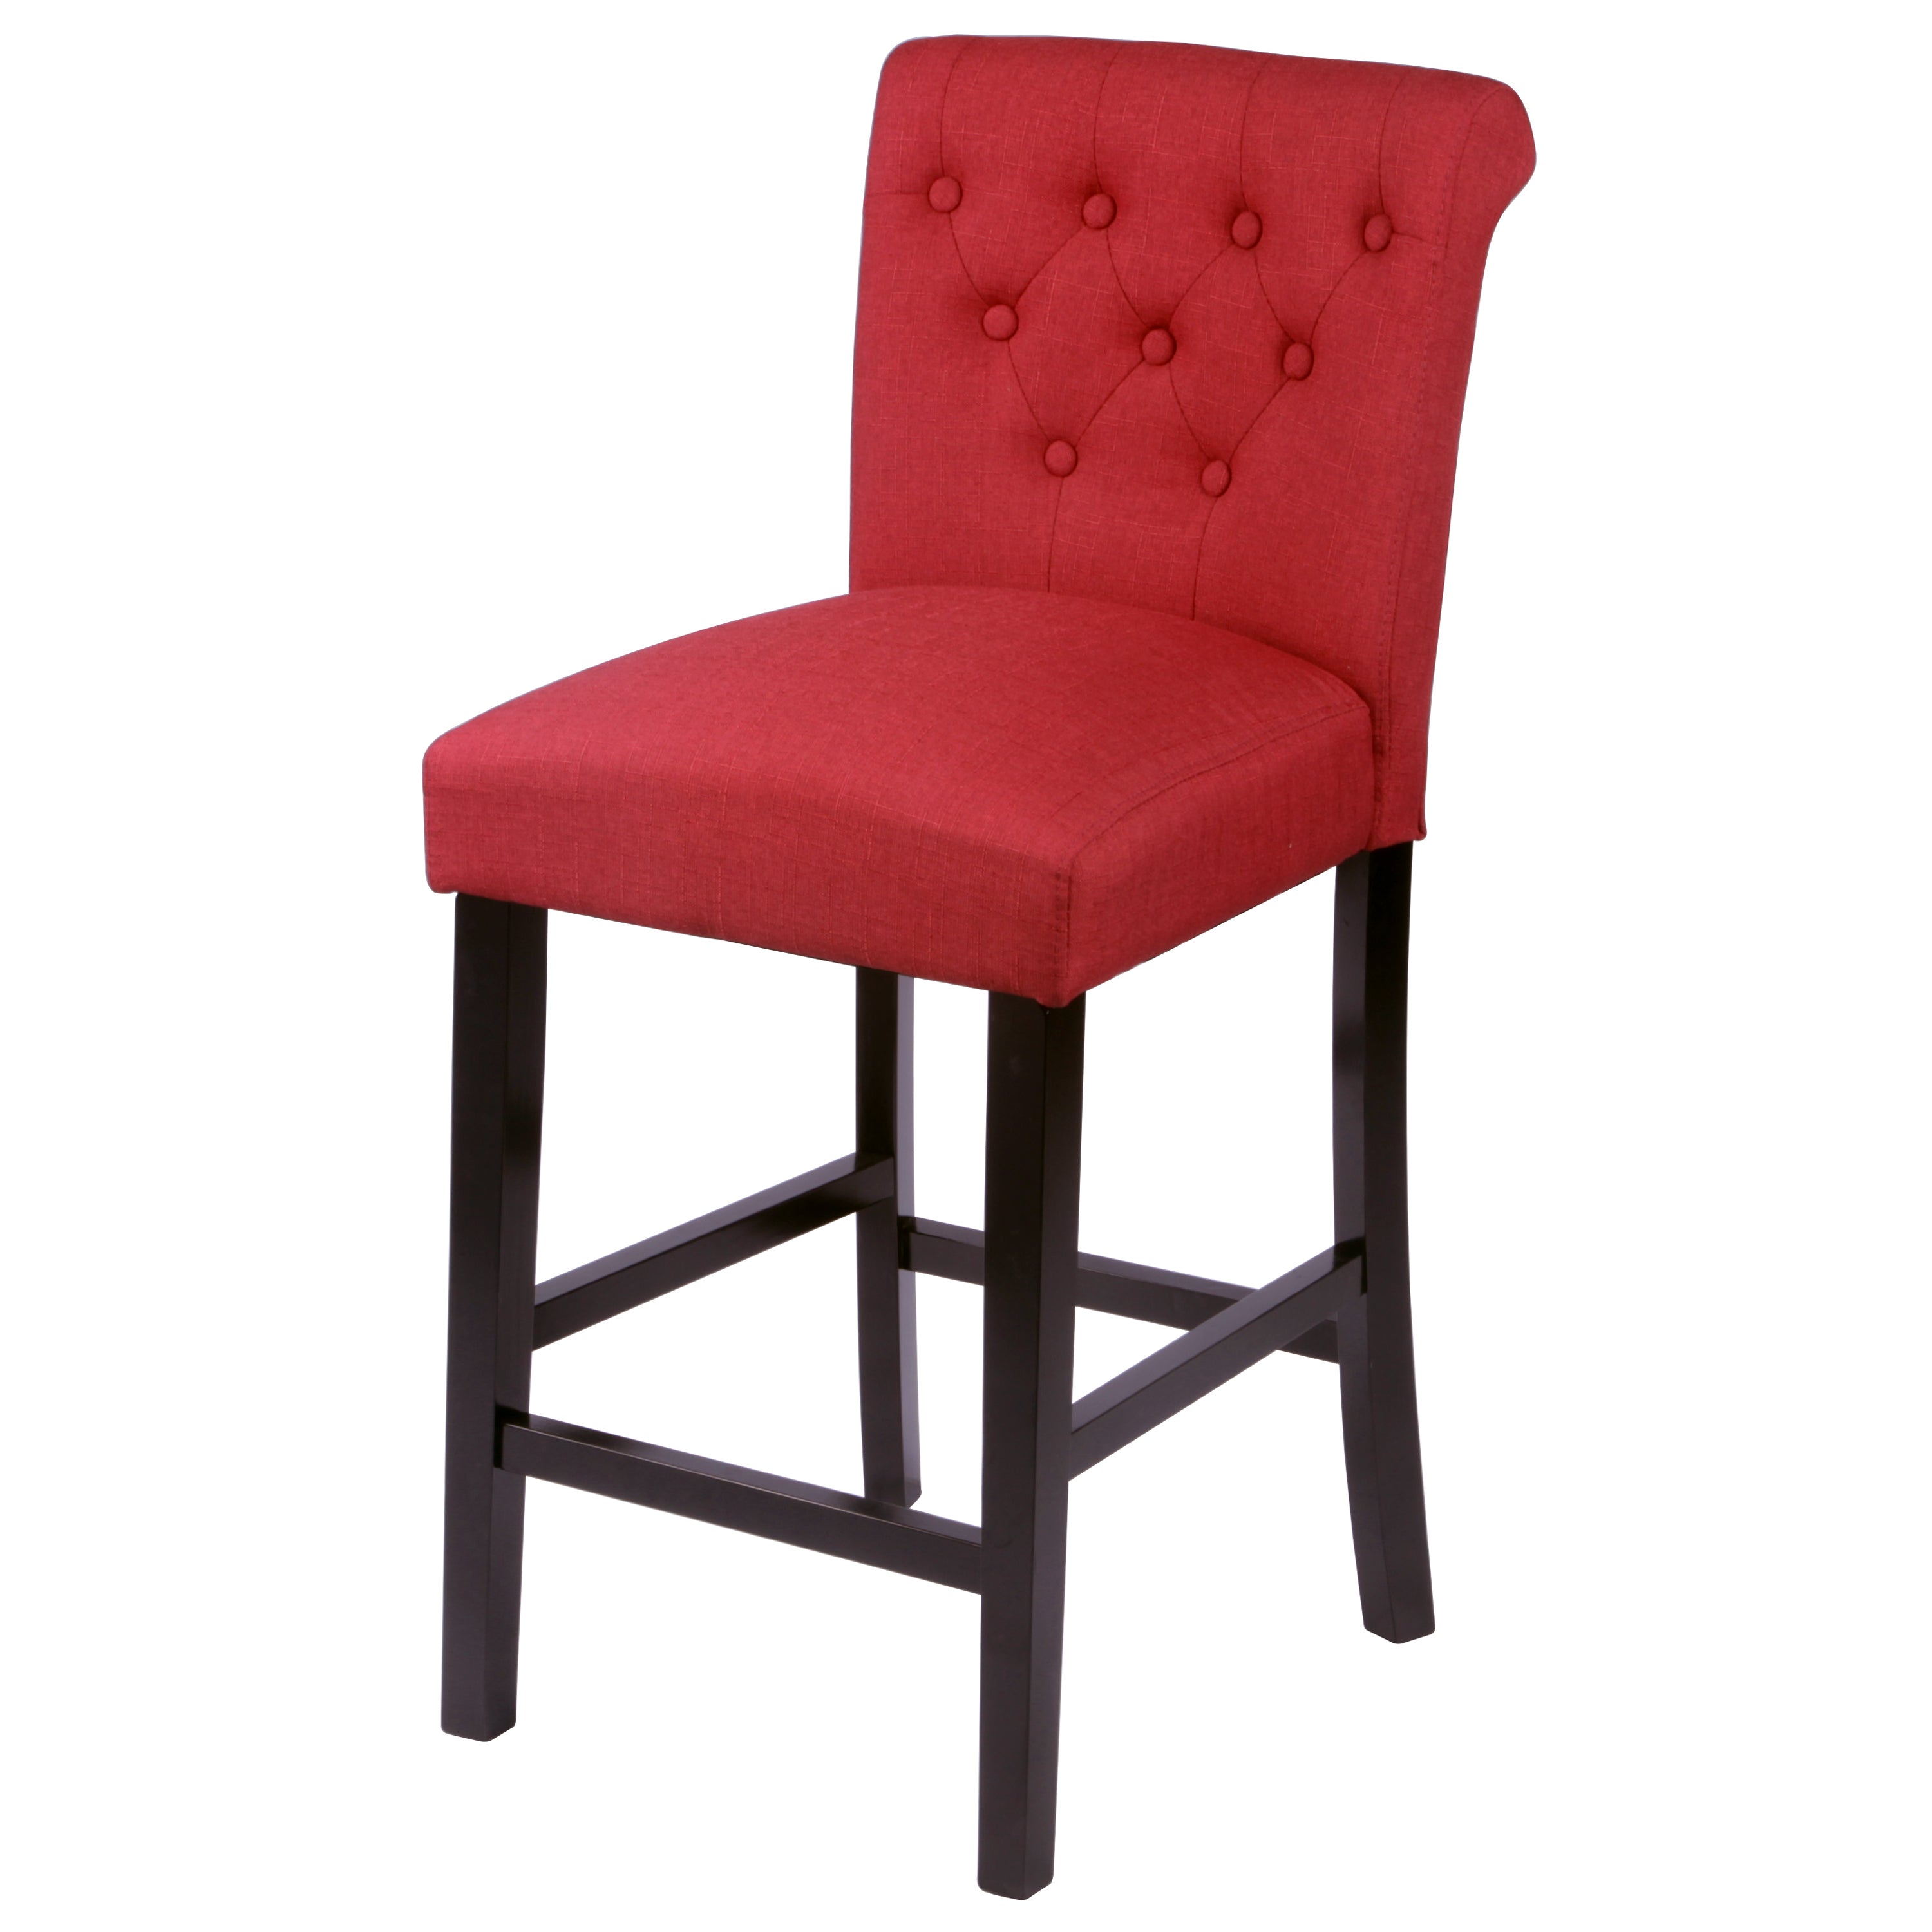 Sopri Counter Chairs (Set of 2)